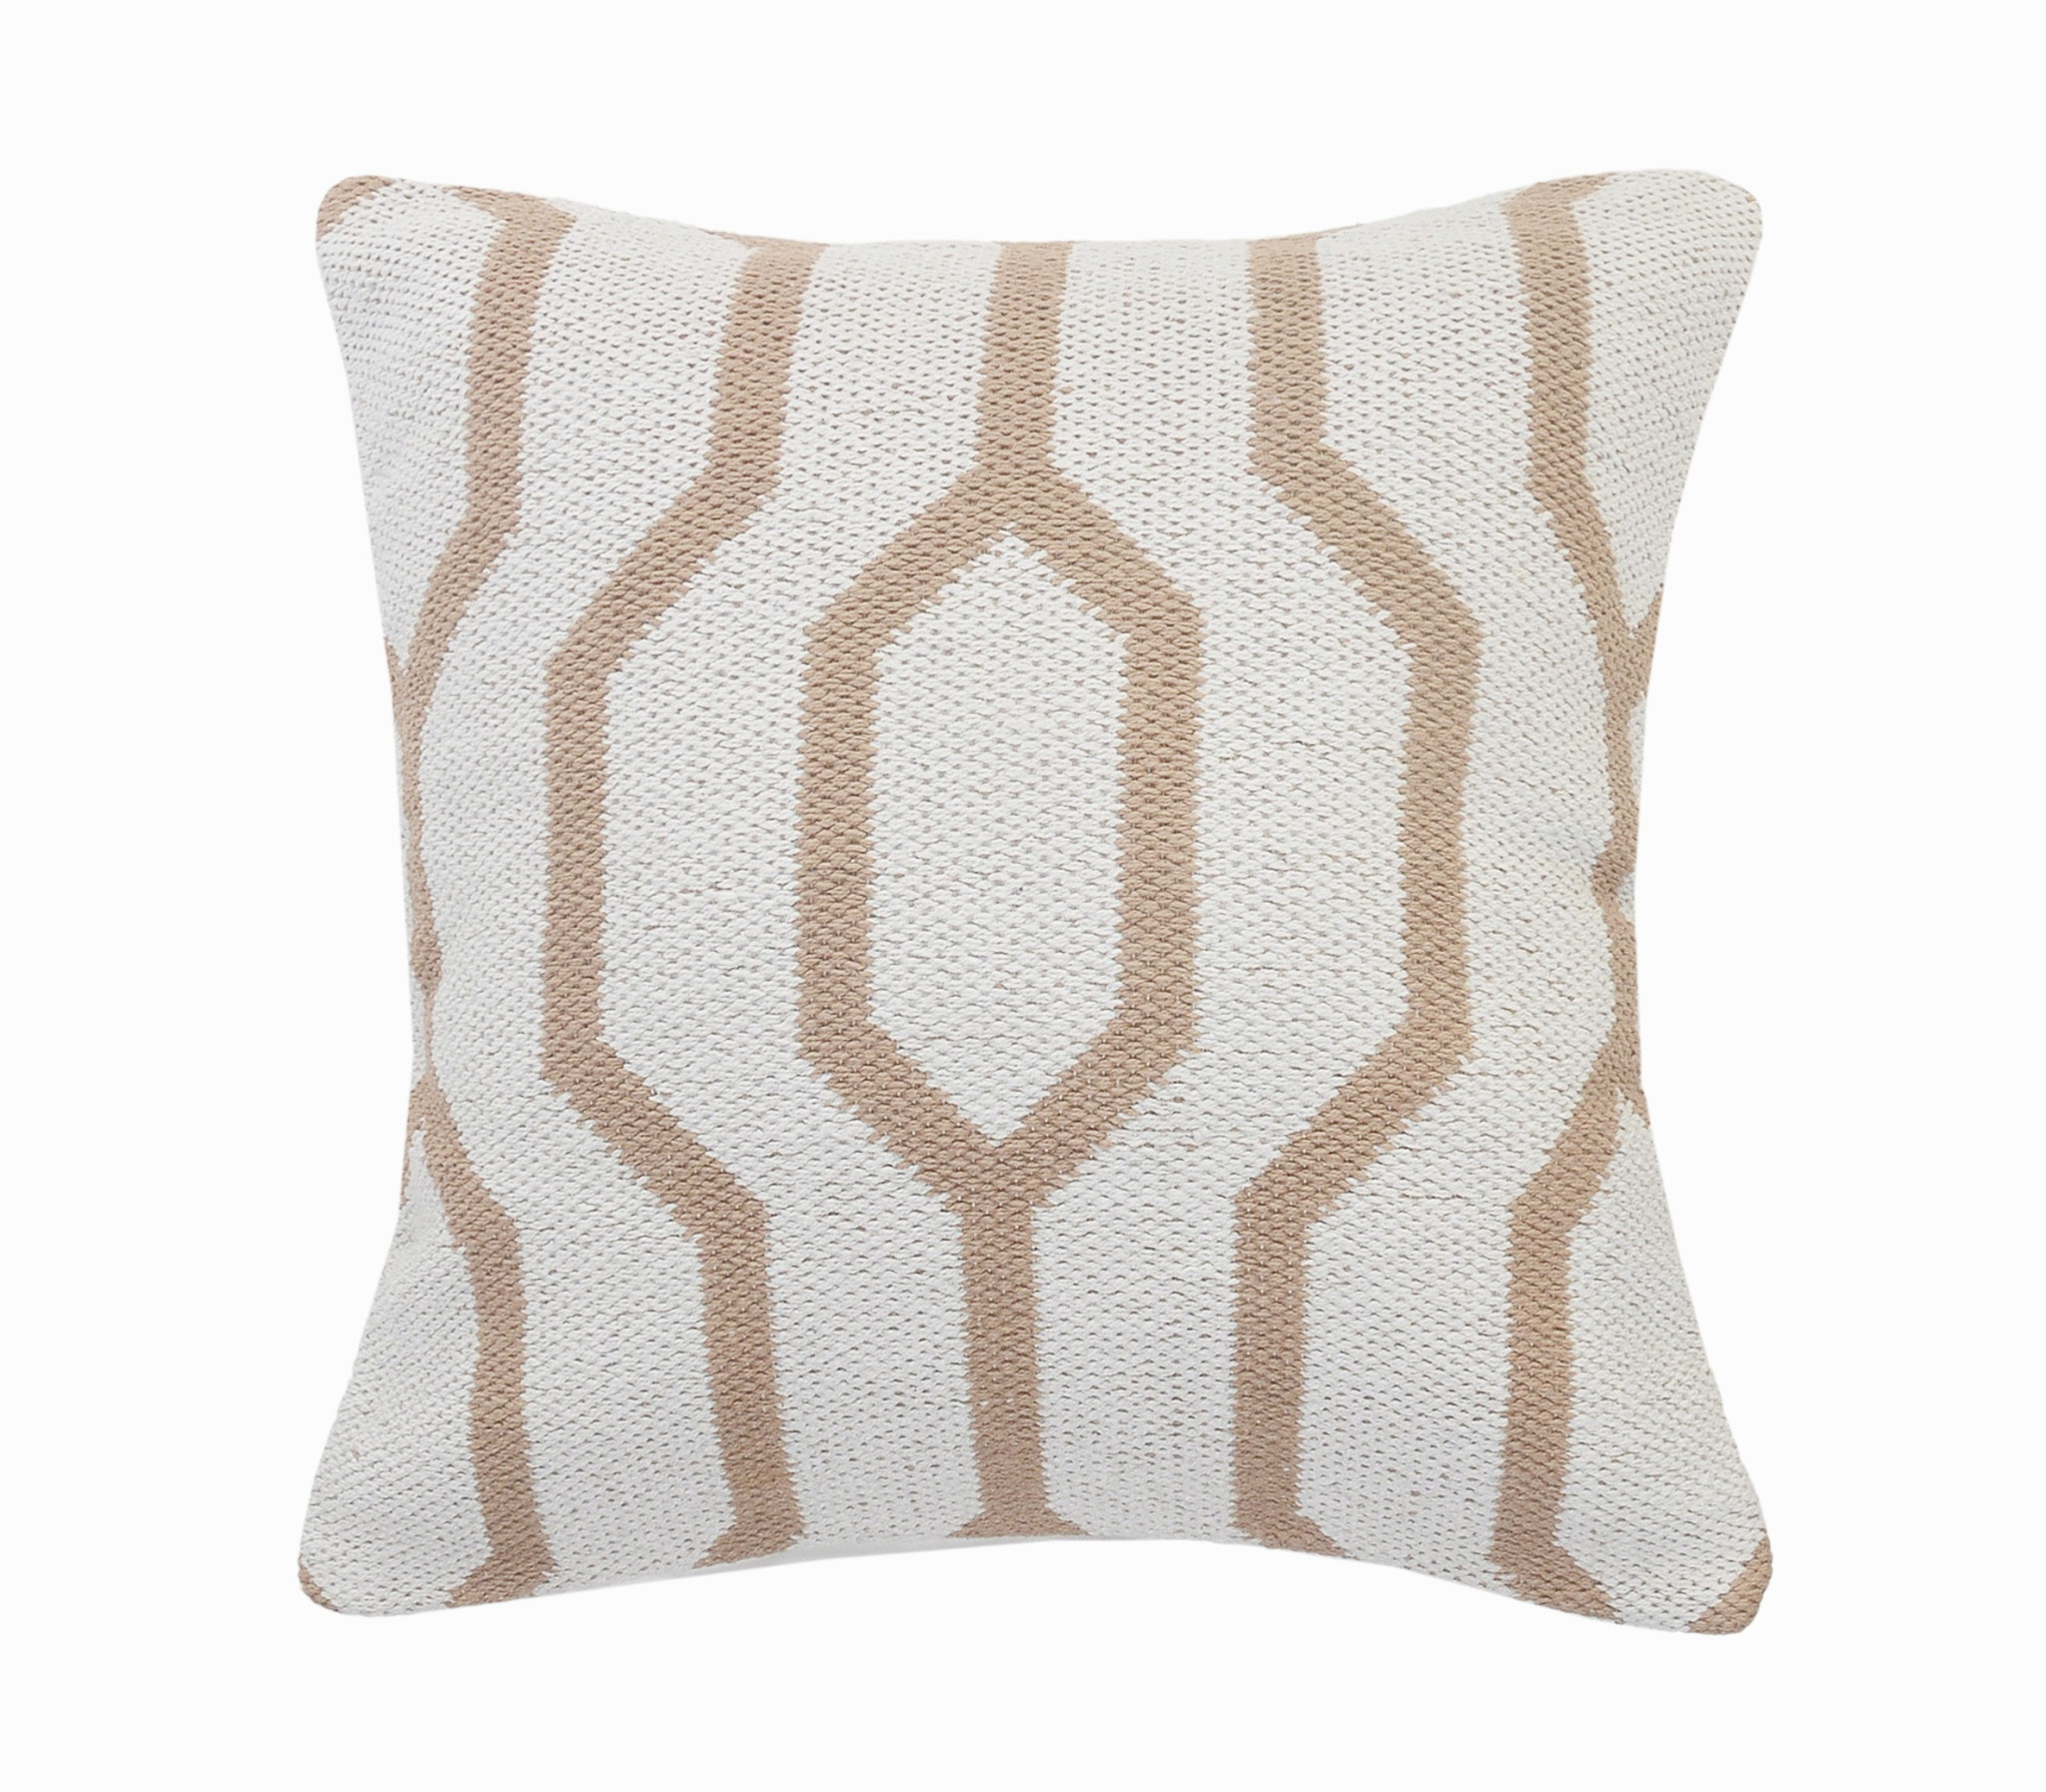 20" X 20" White And Tan 100% Cotton Geometric Zippered Pillow-516808-1